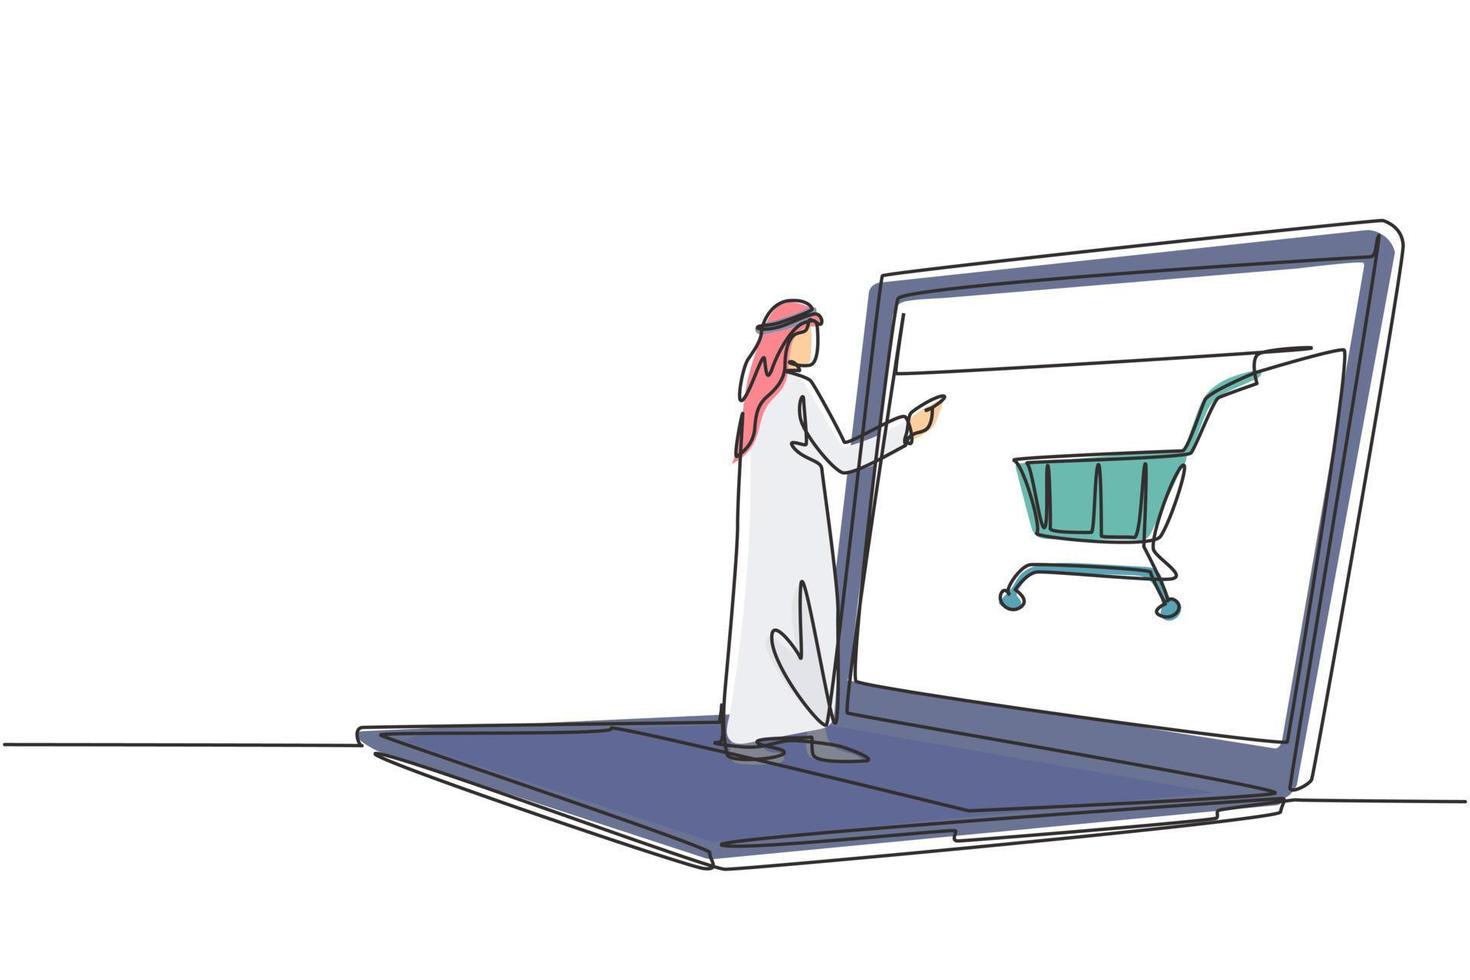 enda en rad ritning av ung arabisk man shopping genom laptop skärm med kundvagn. e-handel, digital livsstilskoncept. modern kontinuerlig linje rita design grafisk vektorillustration vektor